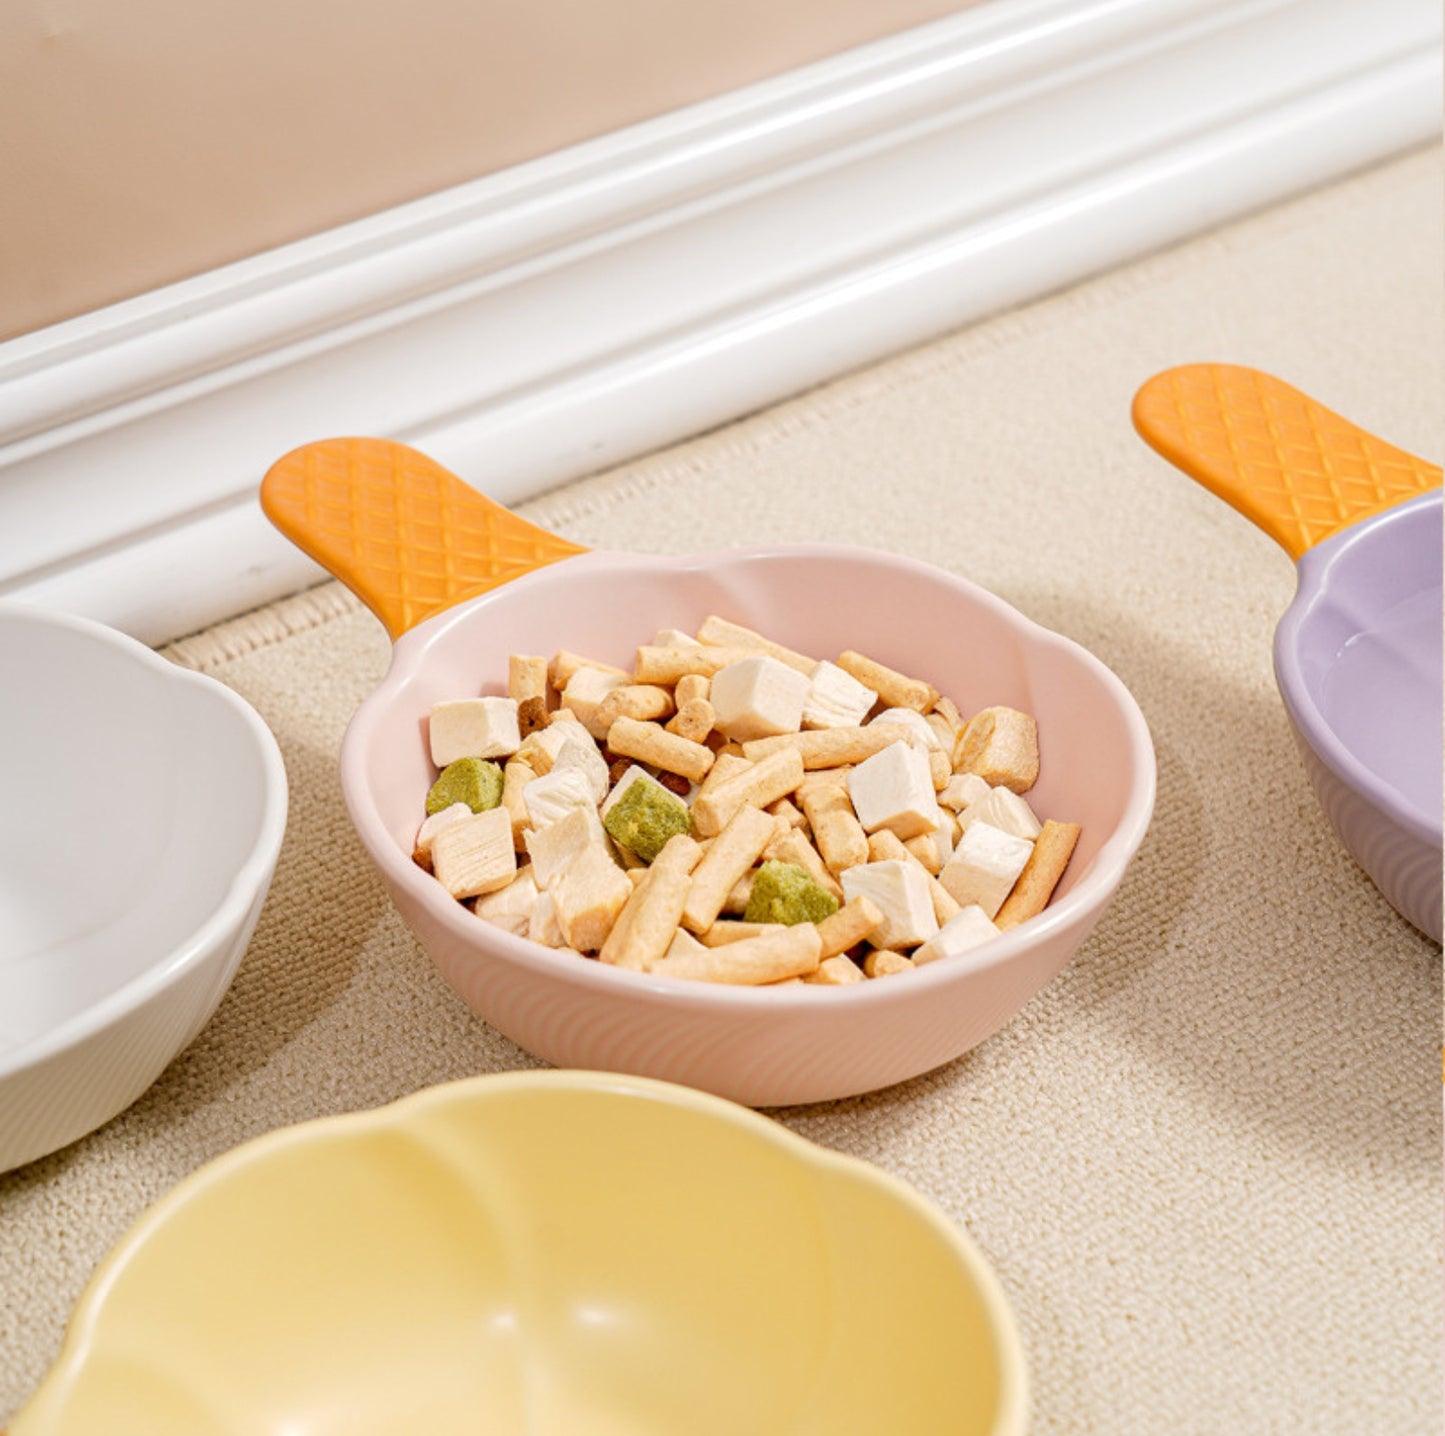 Sweet Ice-Cream Ceramic Pet Bowl with Handle Cat Bowl Small Dog Bowl